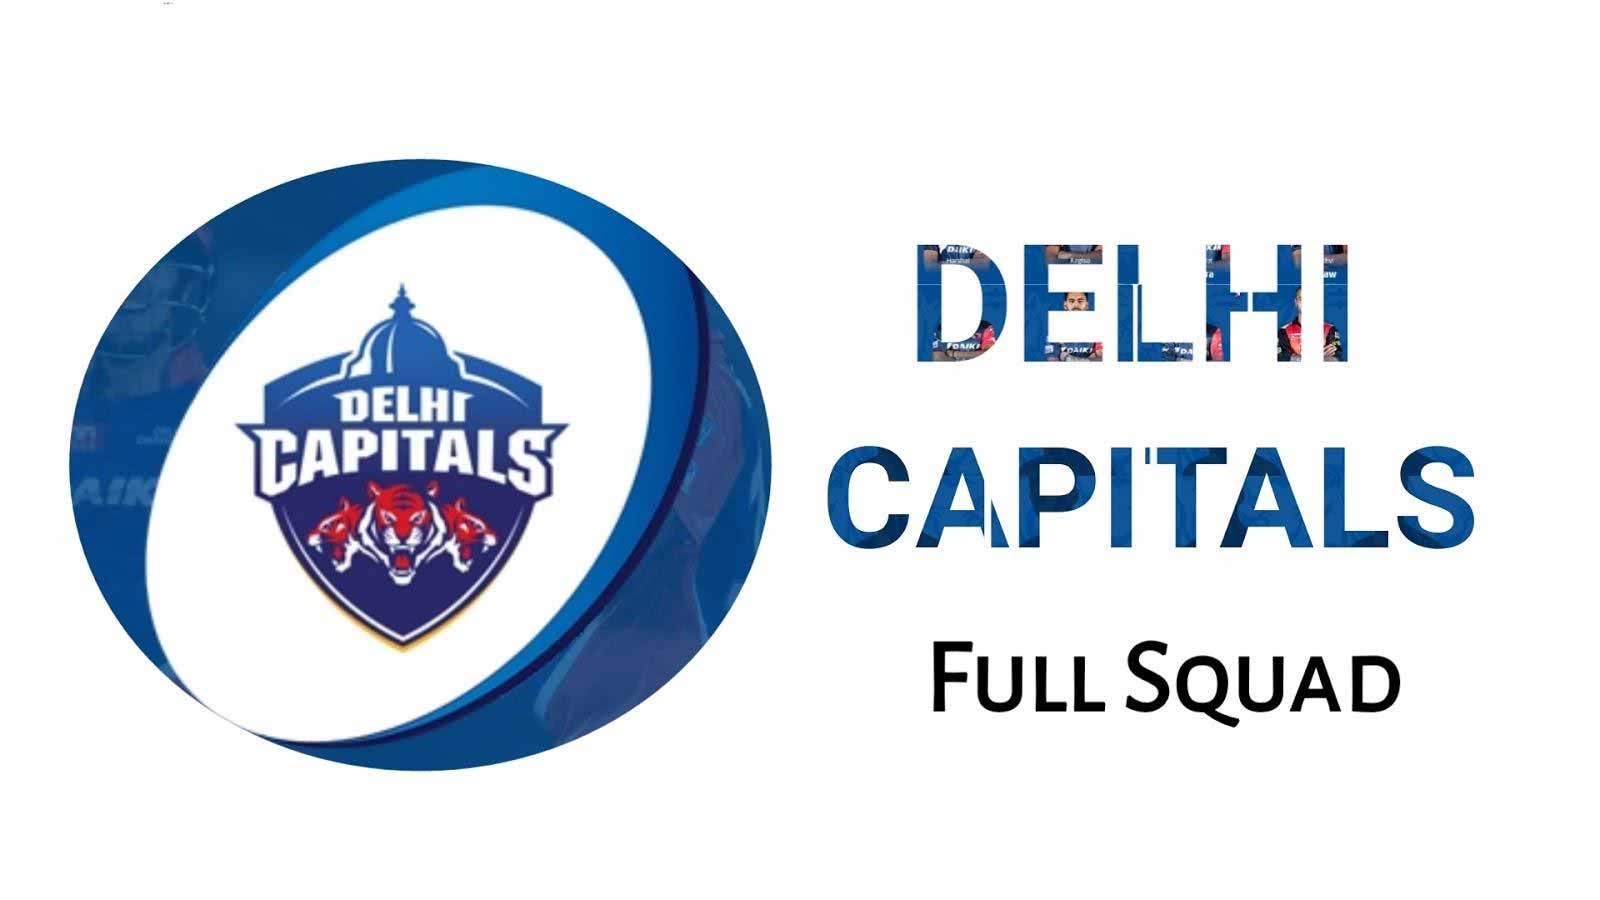 Delhi Capitals Wallpaper Free High Quility Image Download | The Mayanagari